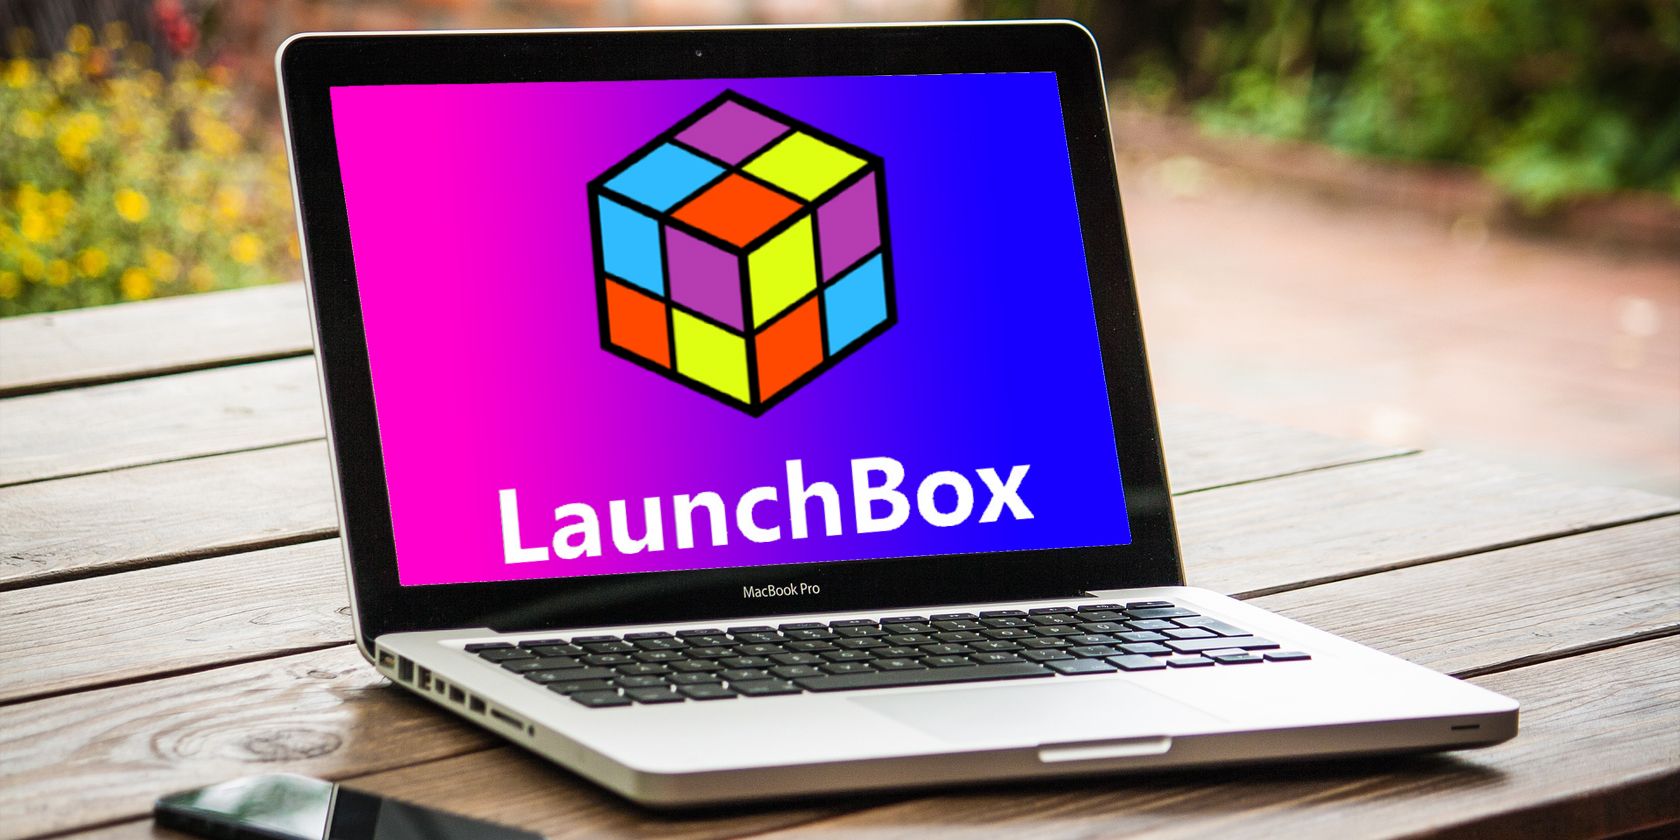 Launchbox Logo On Laptop